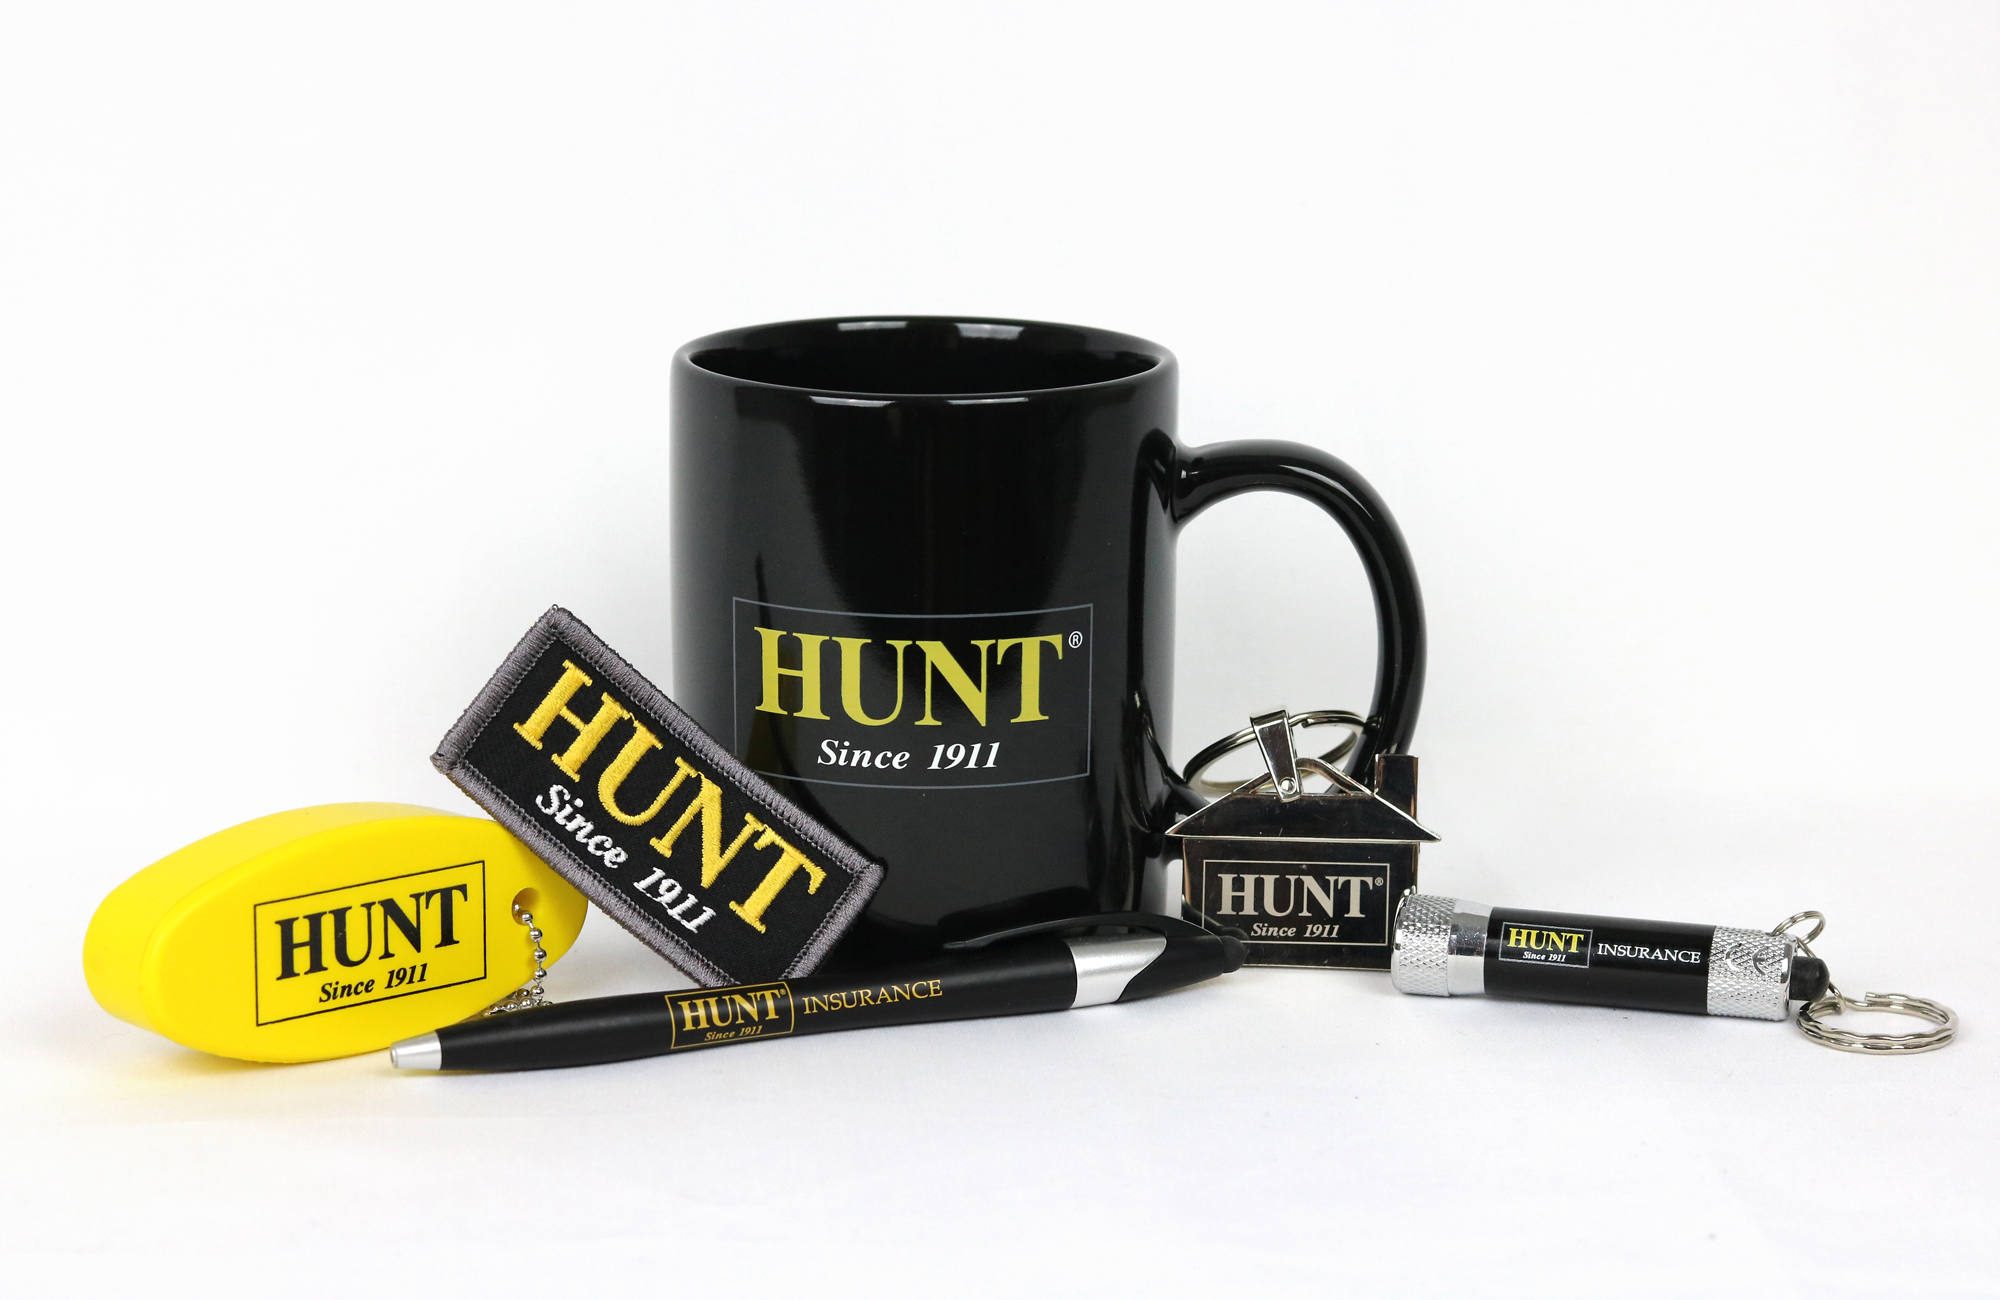 Hunt pens, mug, key chain, and mini flashlight corporate merchandise